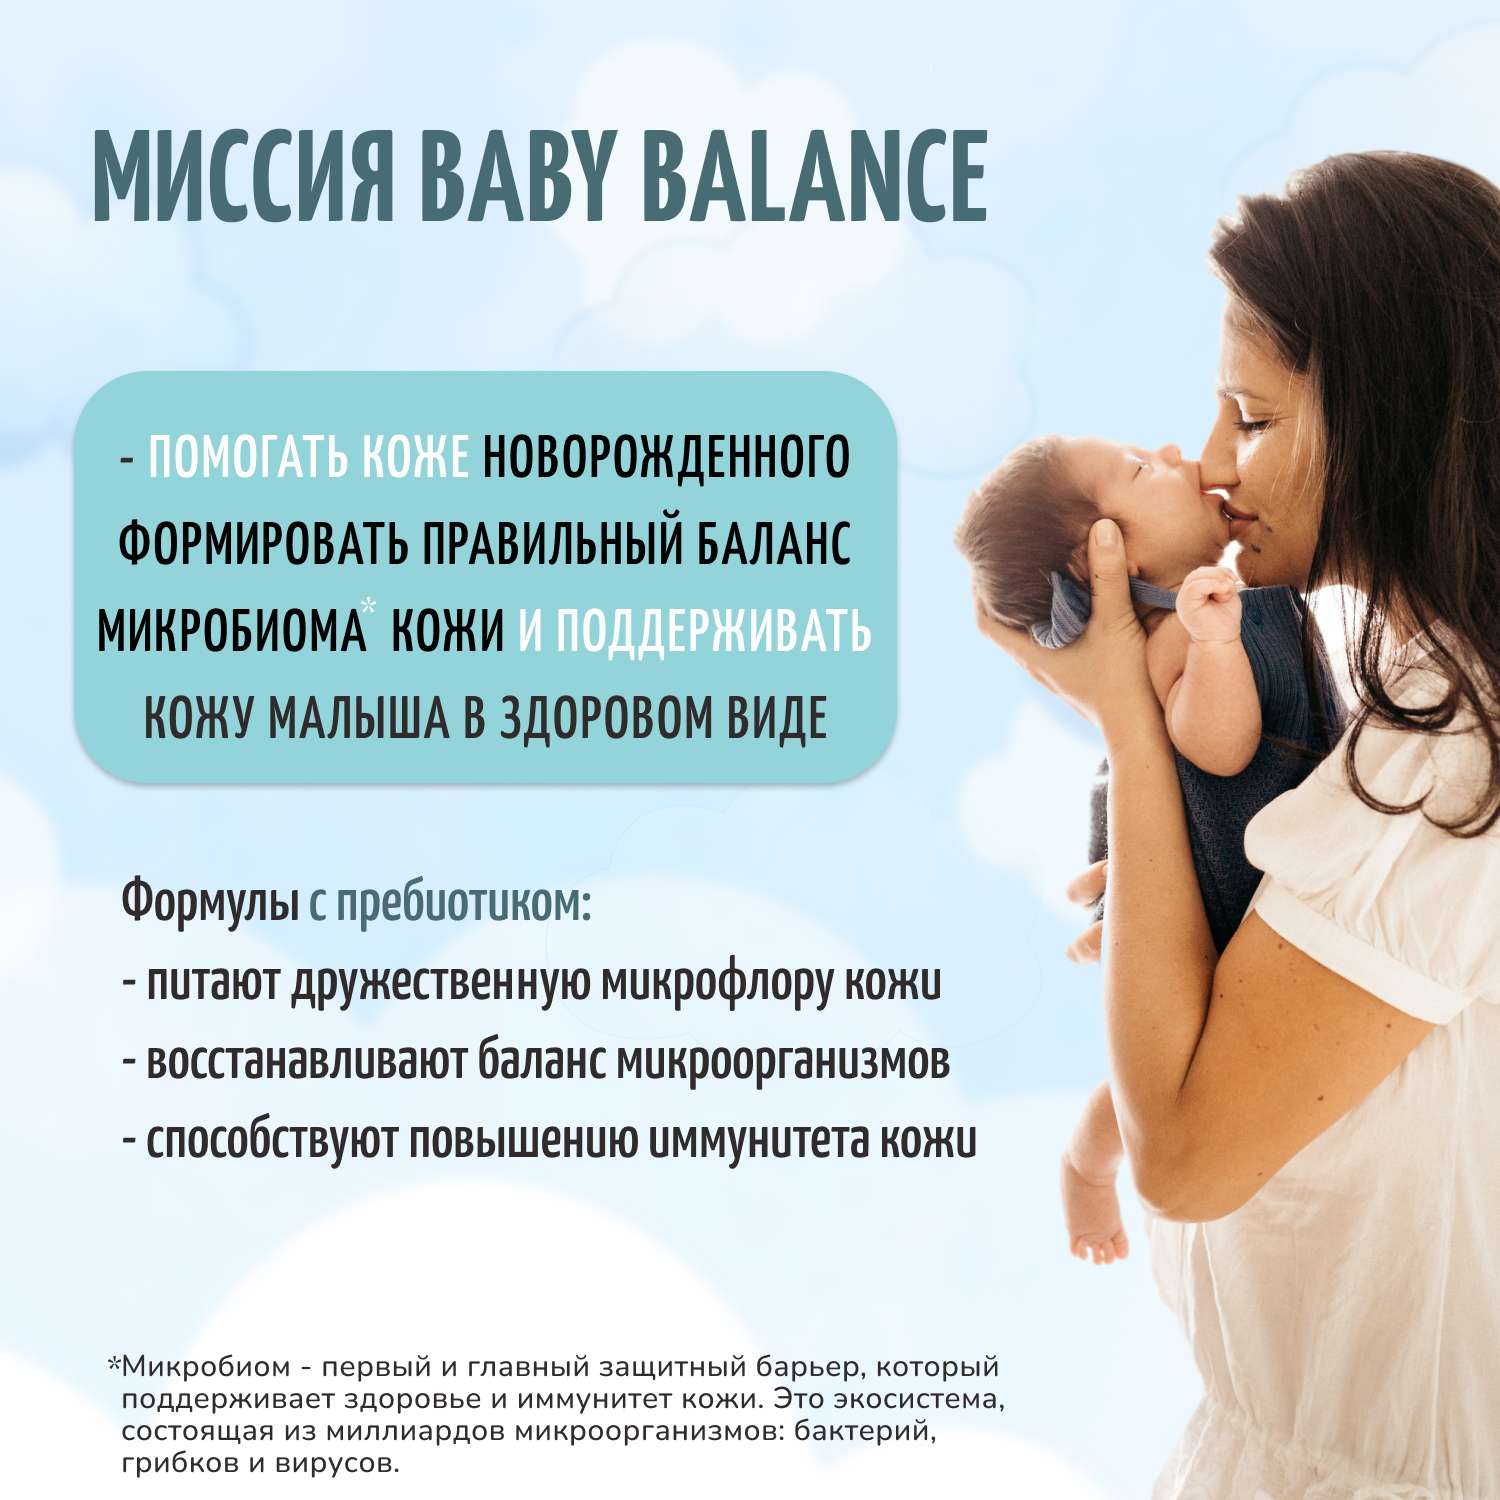 Пена для купания младенца Baby Balance воздушная 250мл 02071303 - фото 4